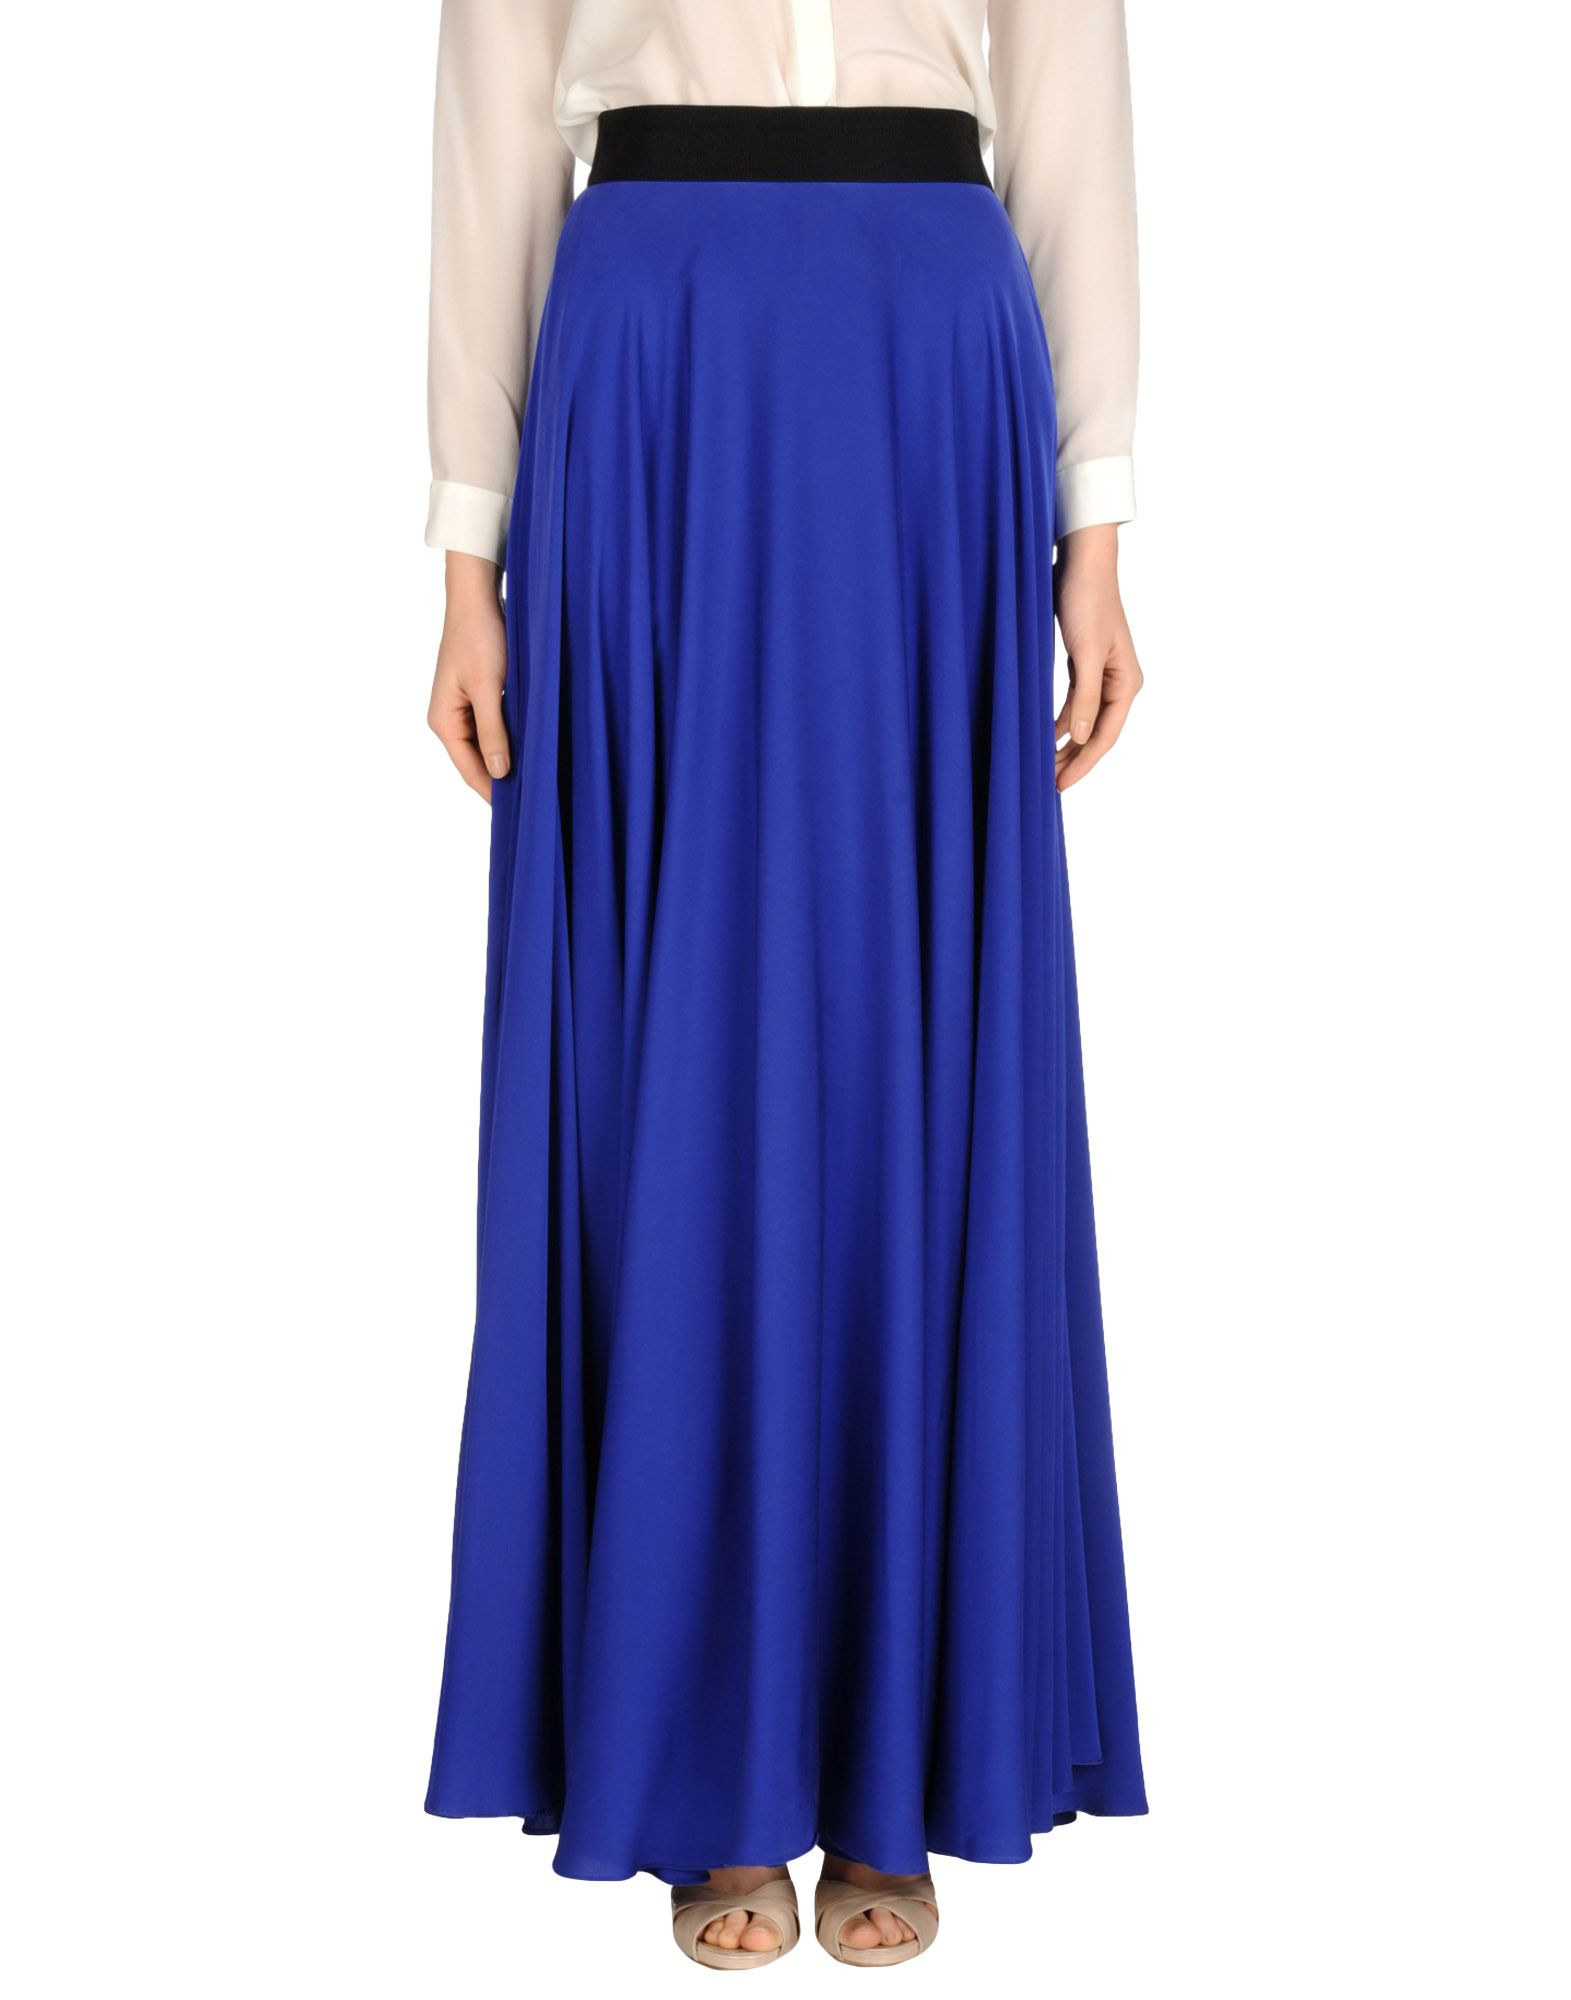 Lyst - Milly Long Skirt in Blue